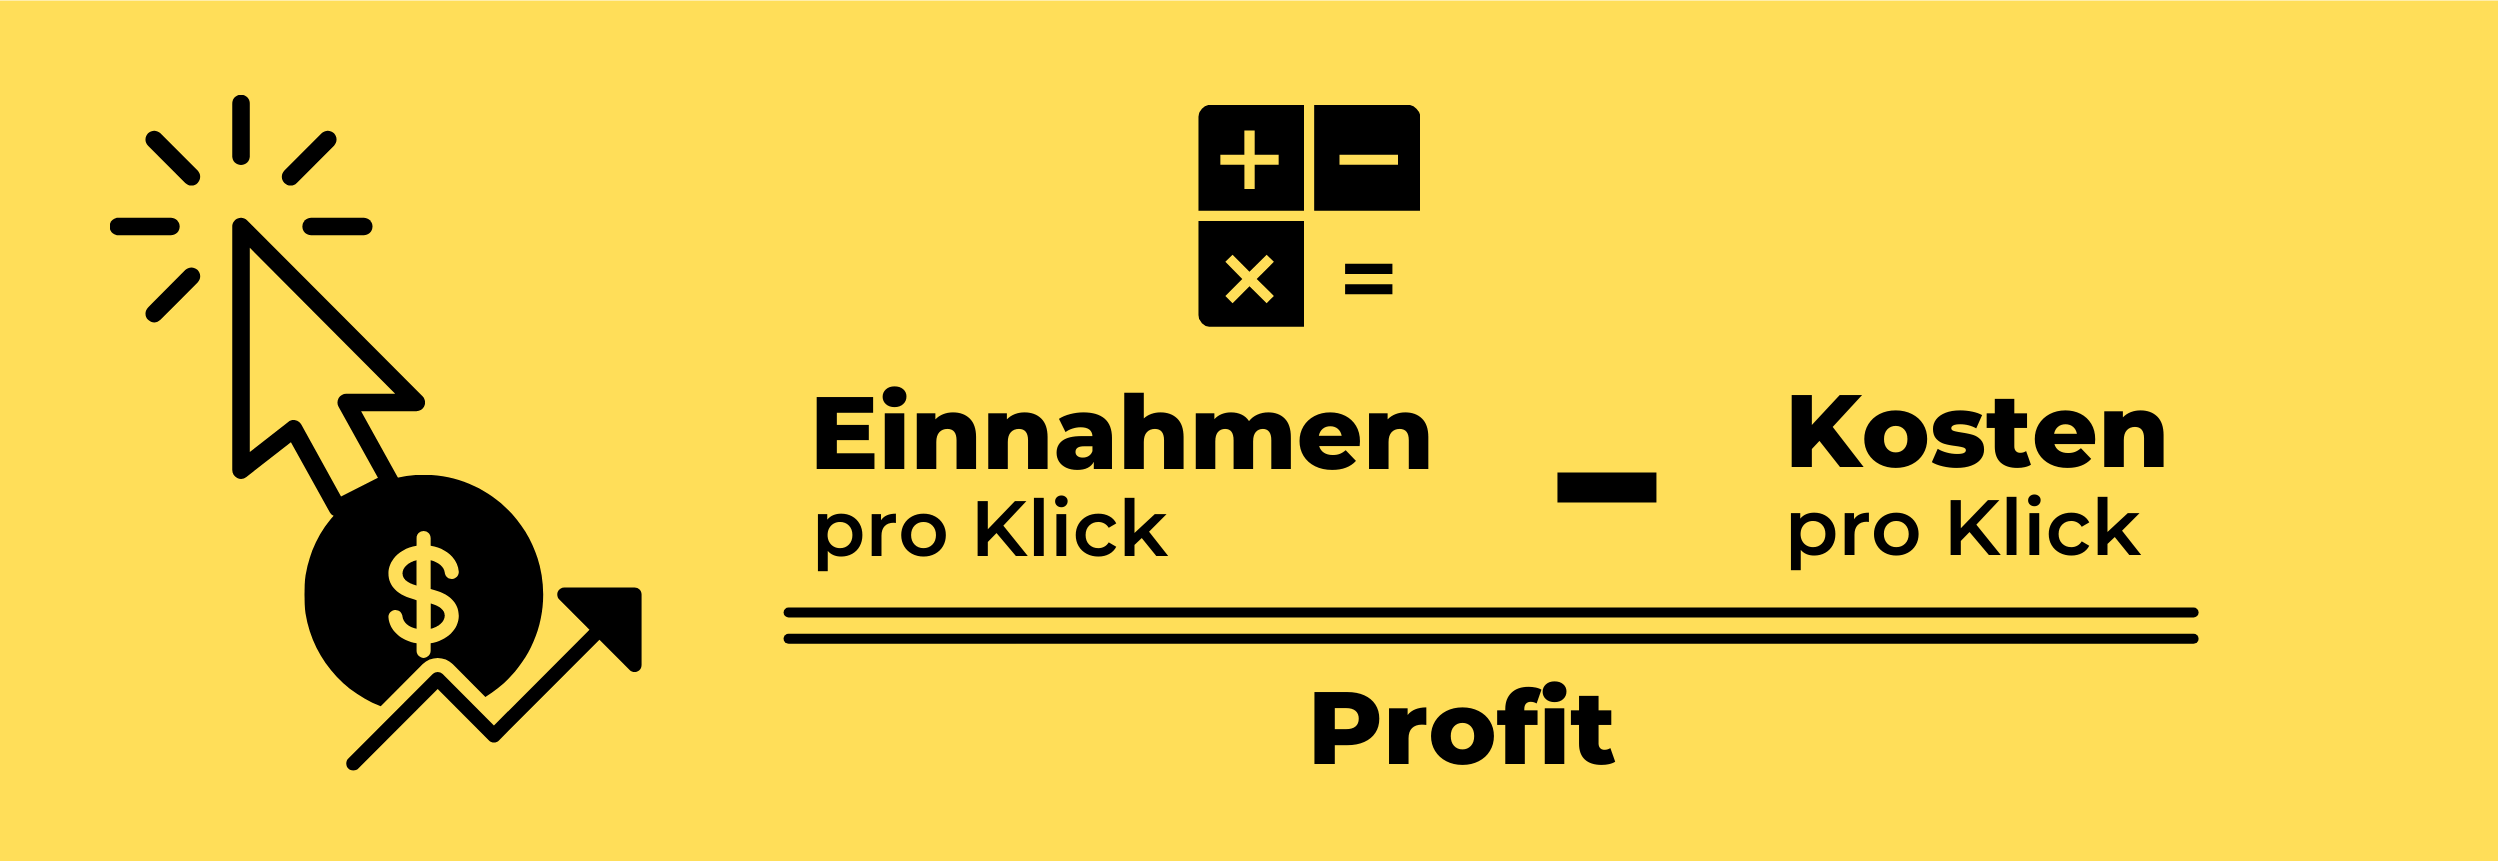 Einnahmen pro Klick Profit